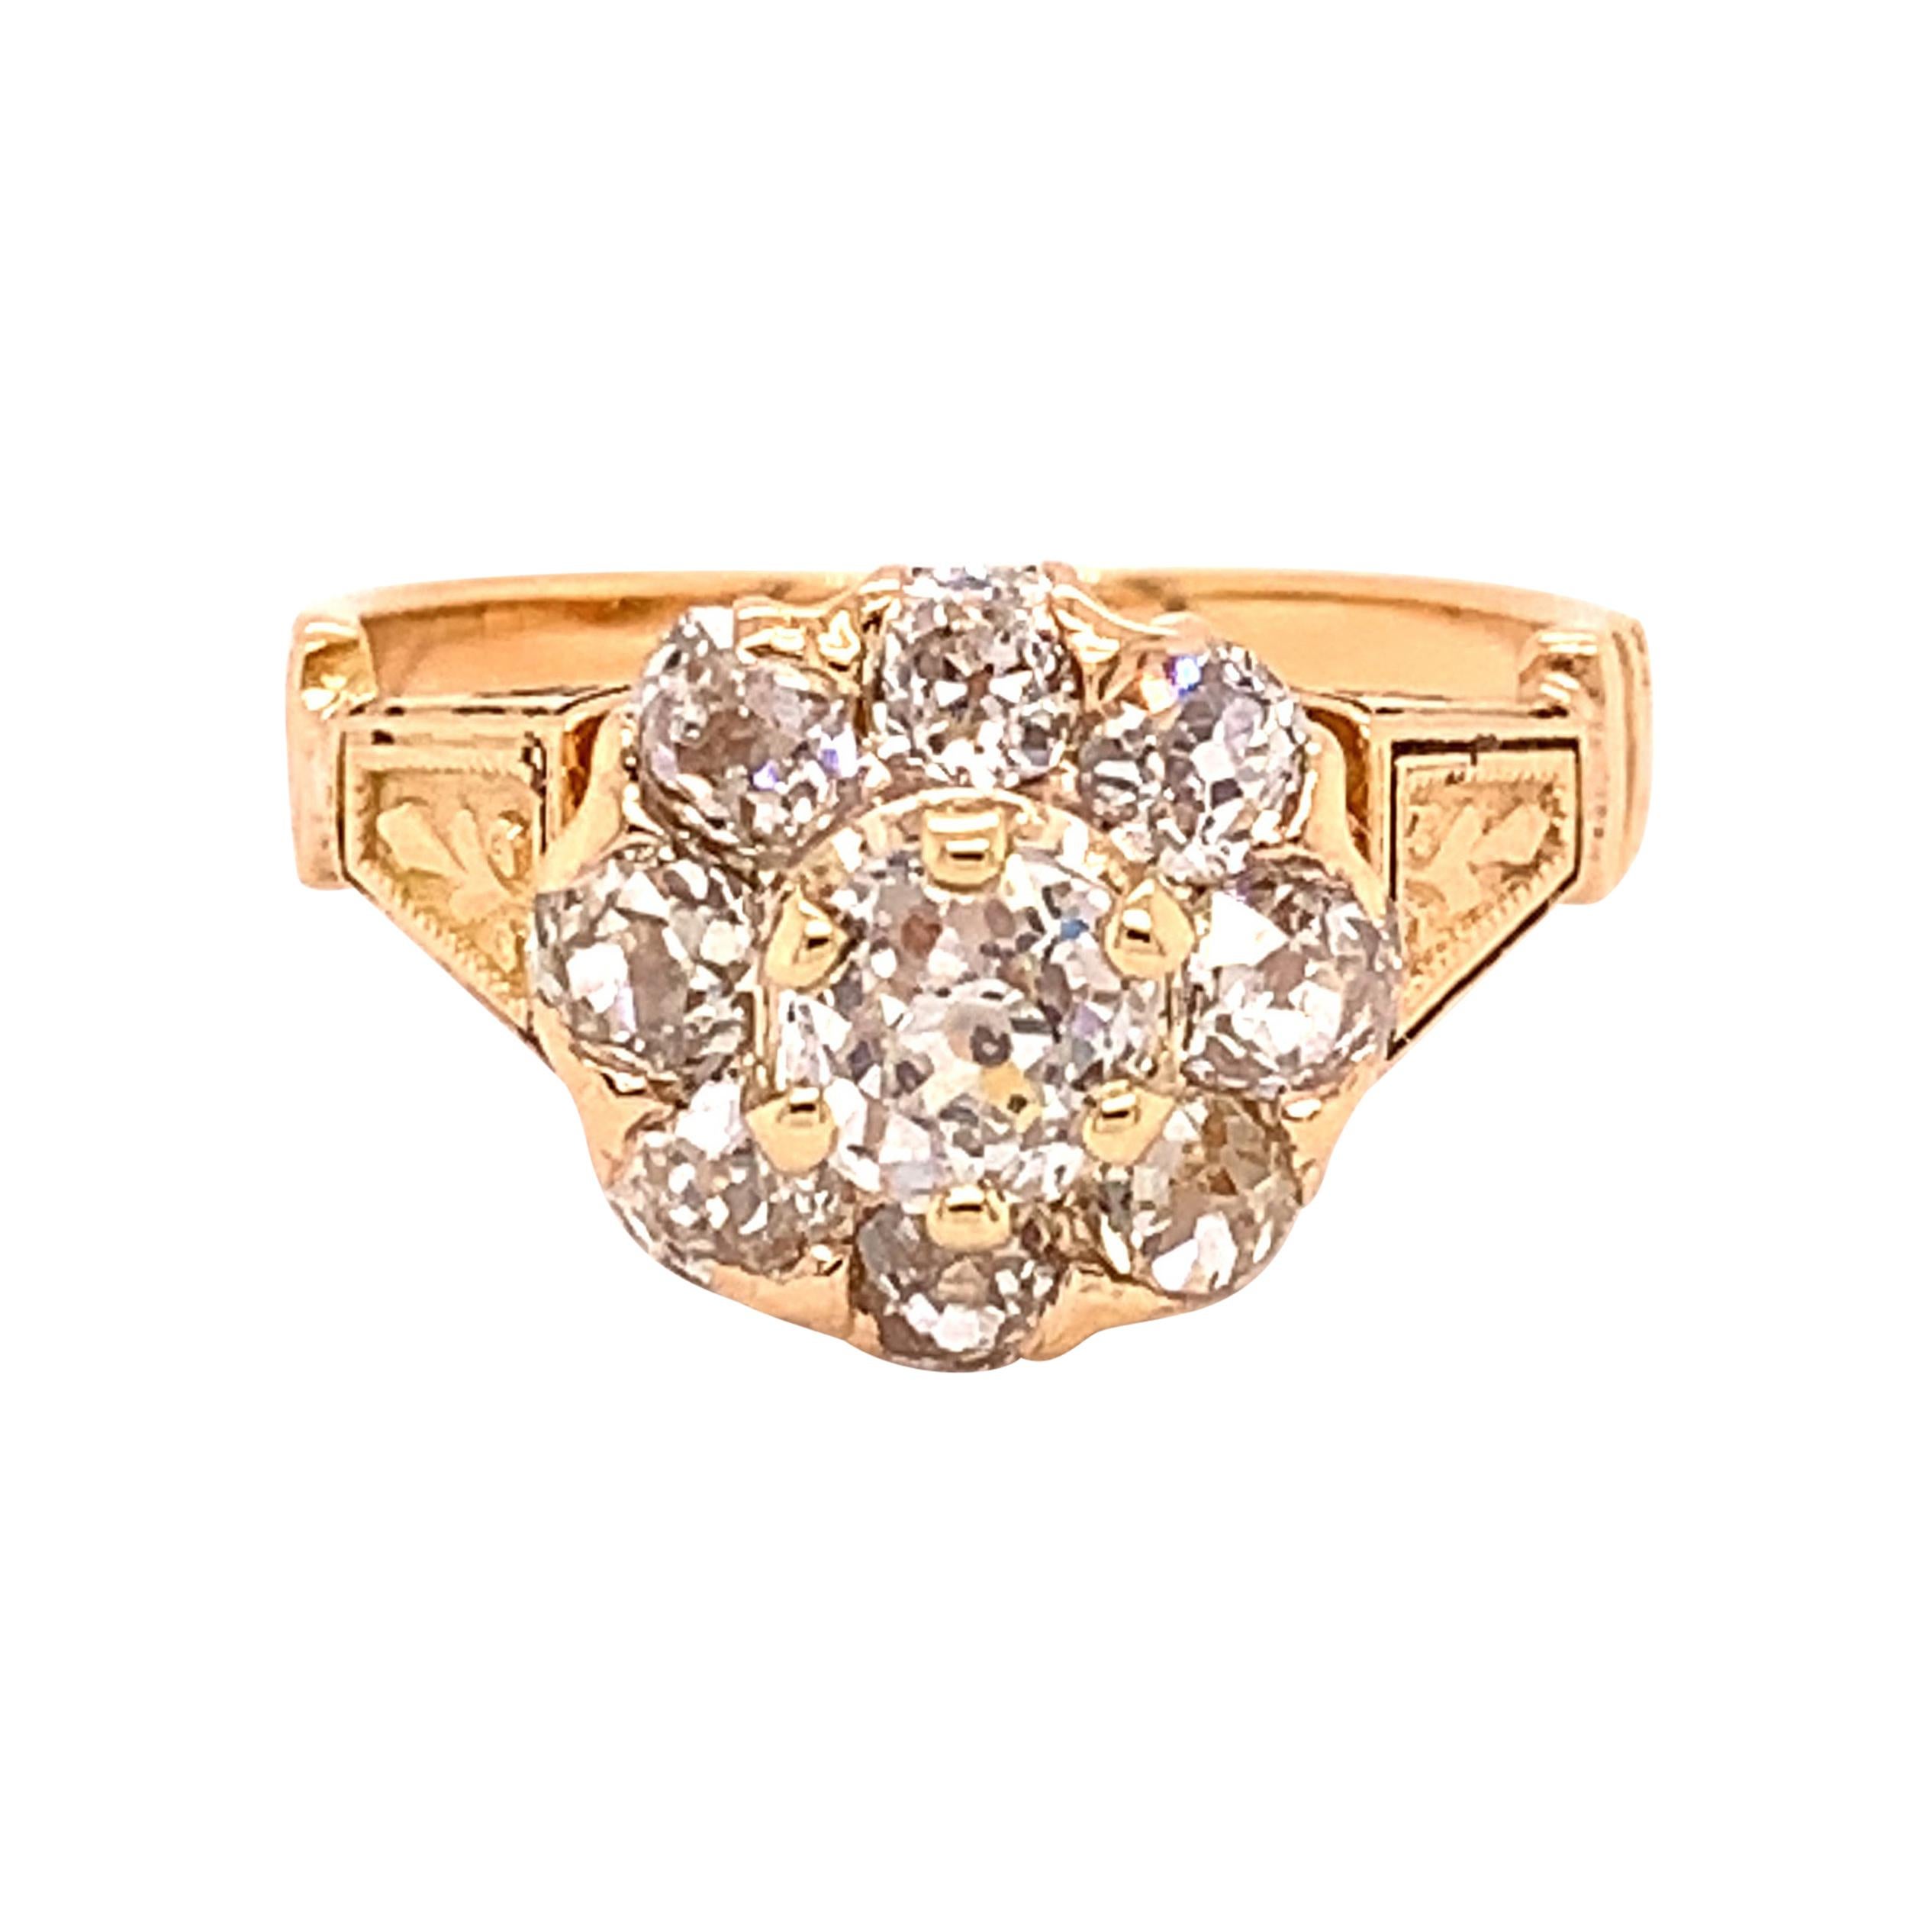 14k Gold Victorian Mine Cut Genuine Natural Diamond Ring 1.61 Carats TW '#J4863'